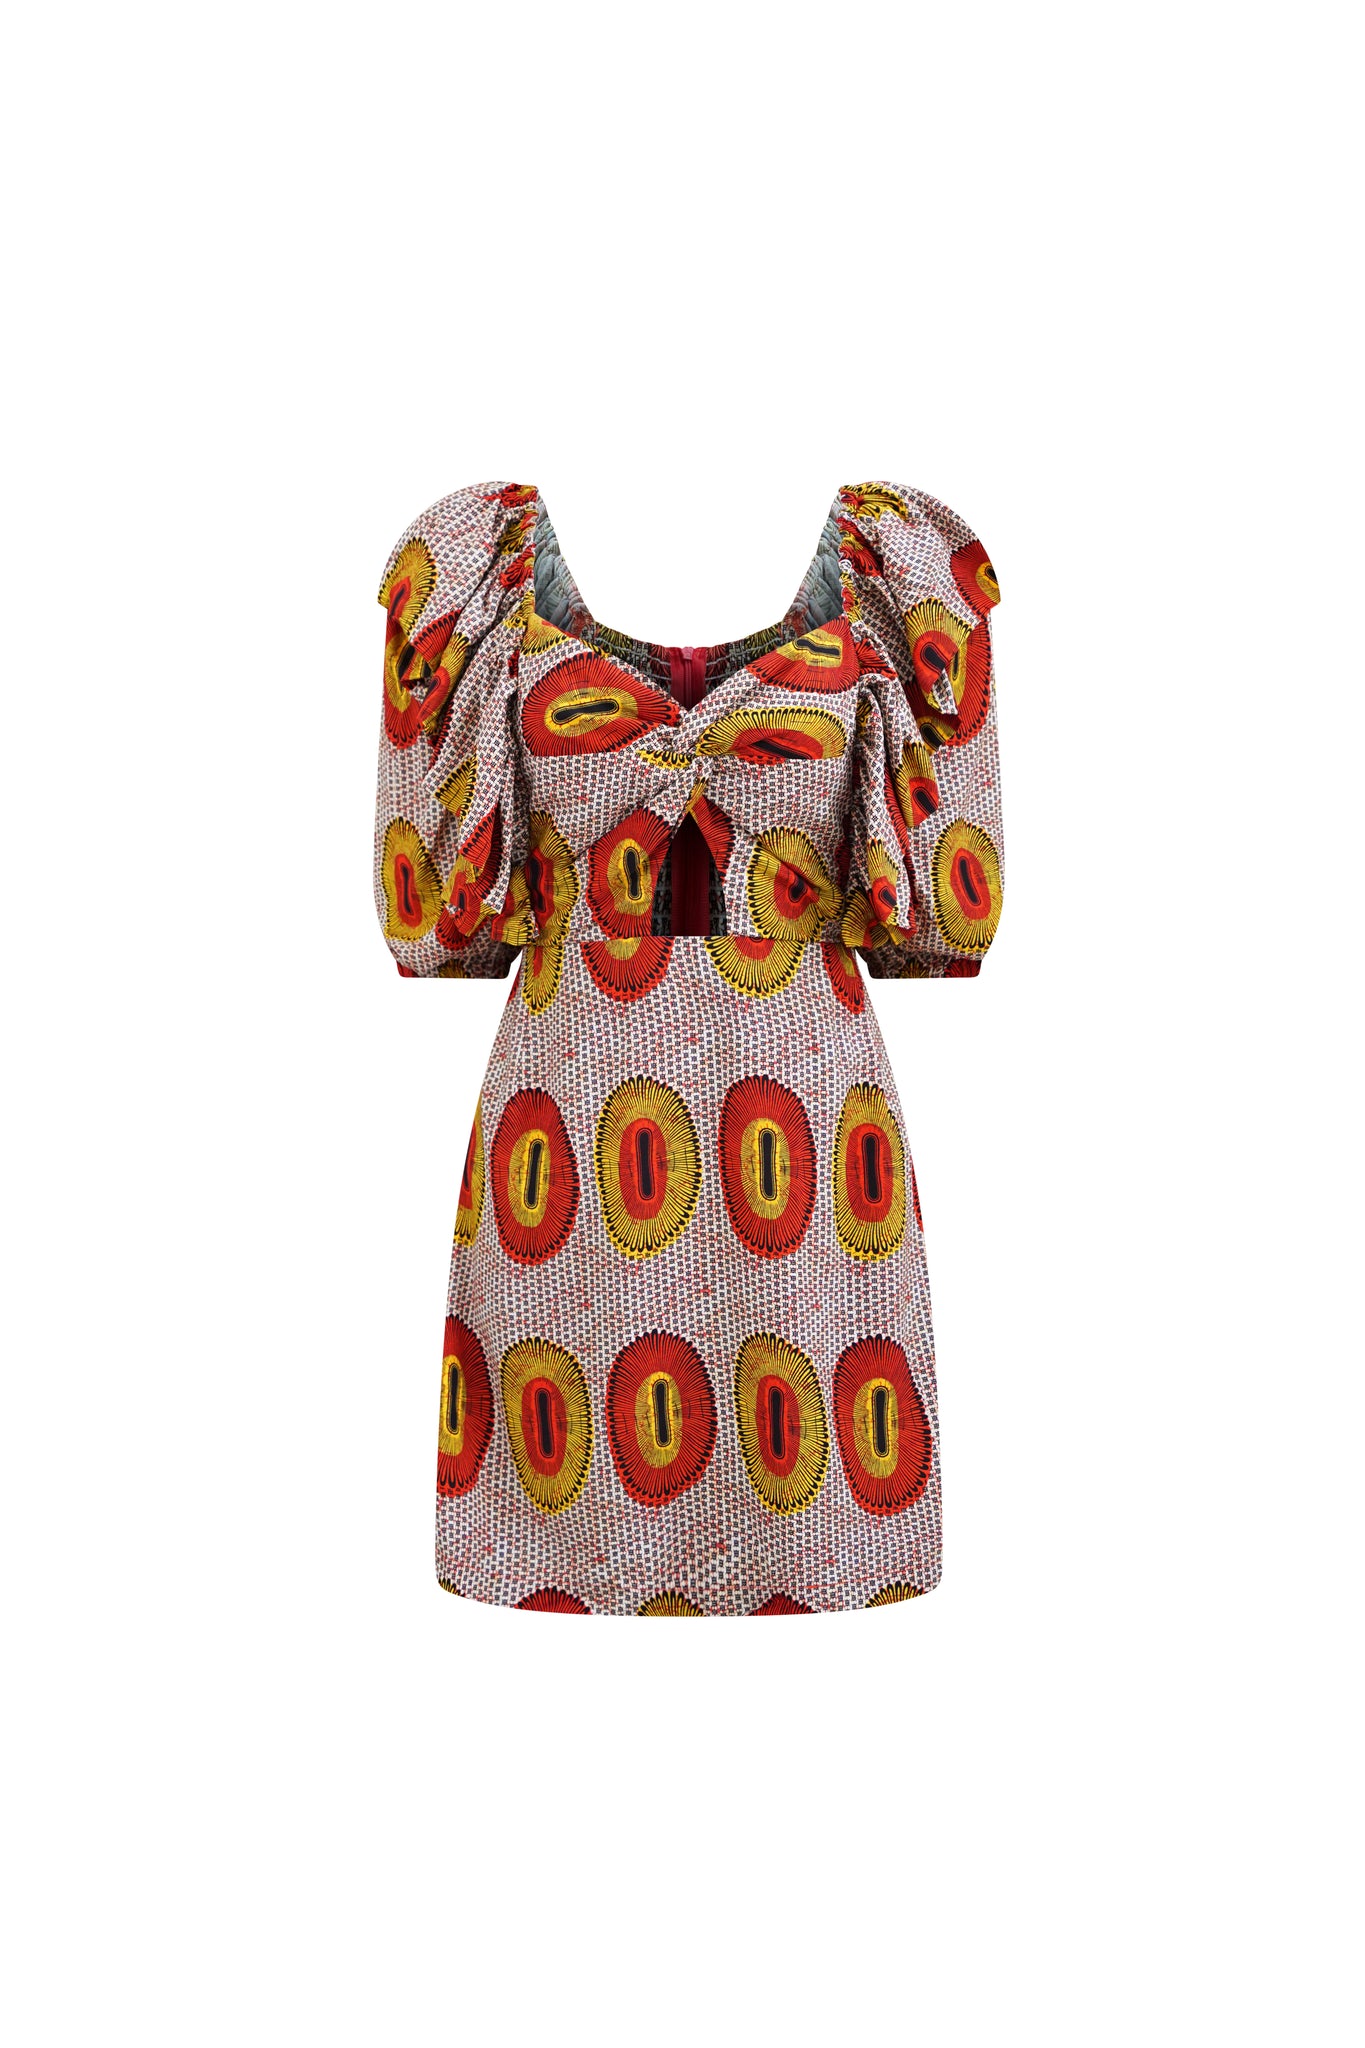 Zalika Mini Dress - Yellow and Orange Rhythmic Spirits Print | ILC OA OG